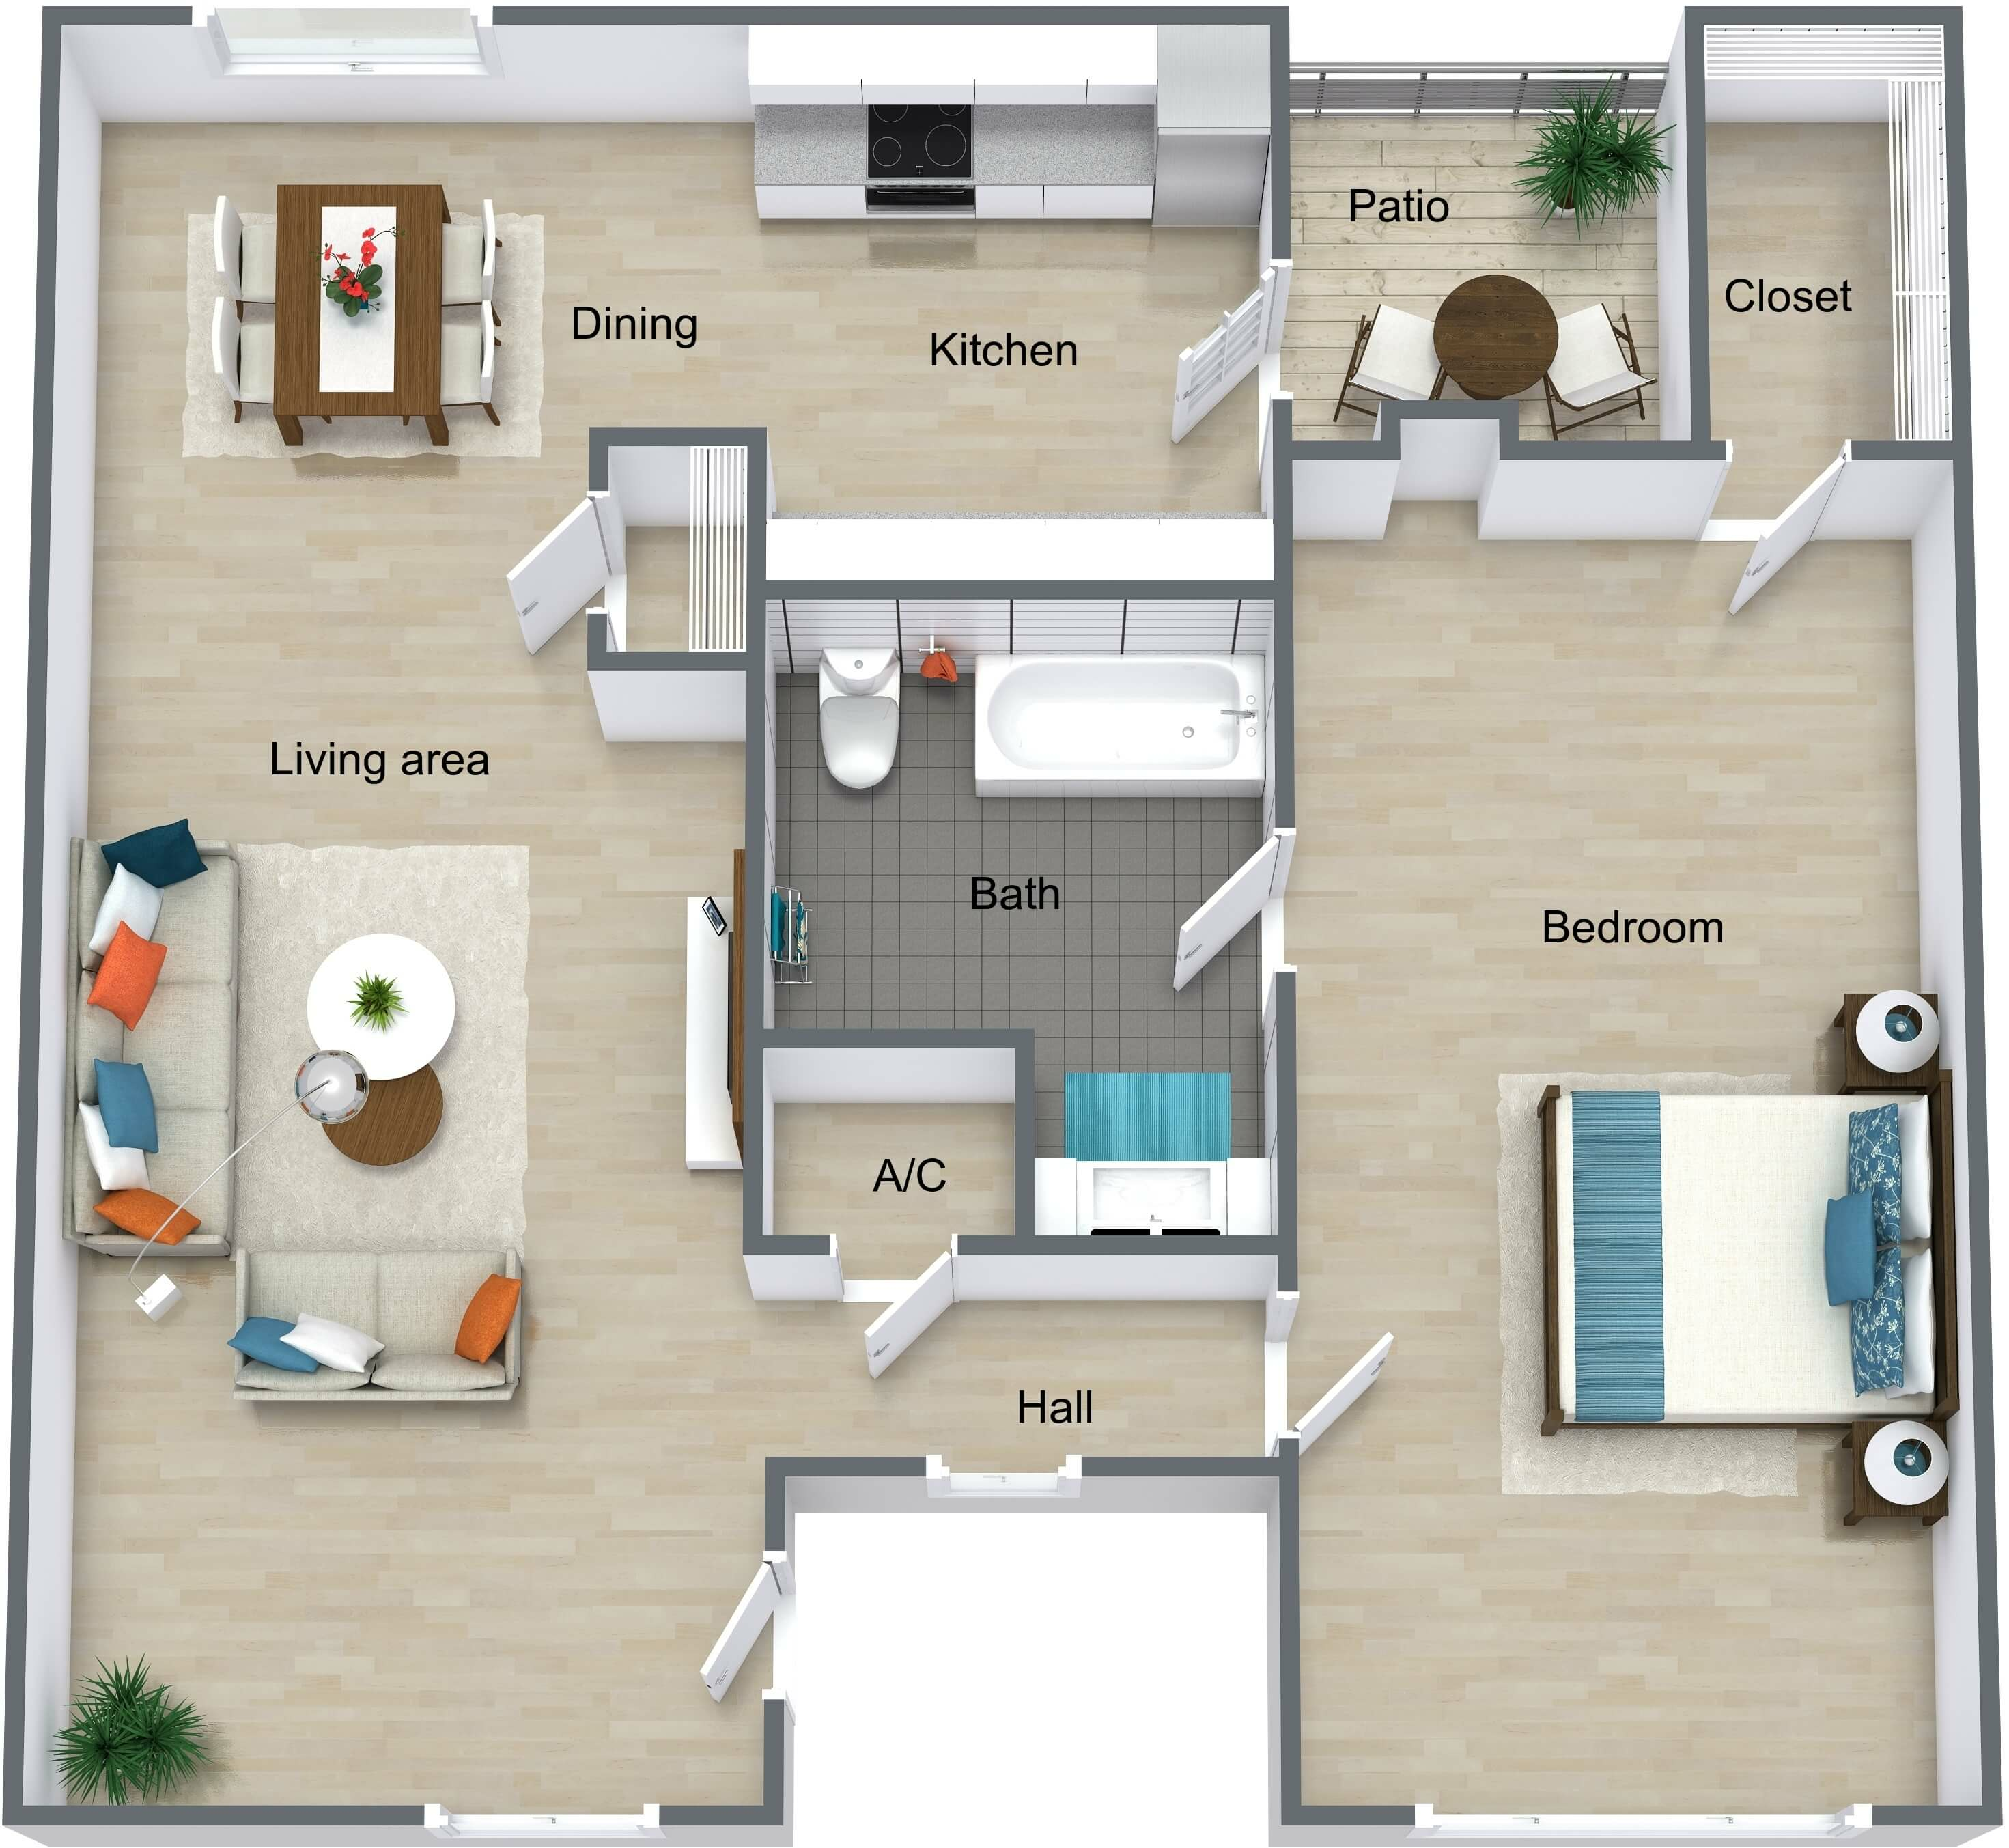 Wymore Grove Apts - 1_1 765 sf - 3D Floor Plan (1).jpeg